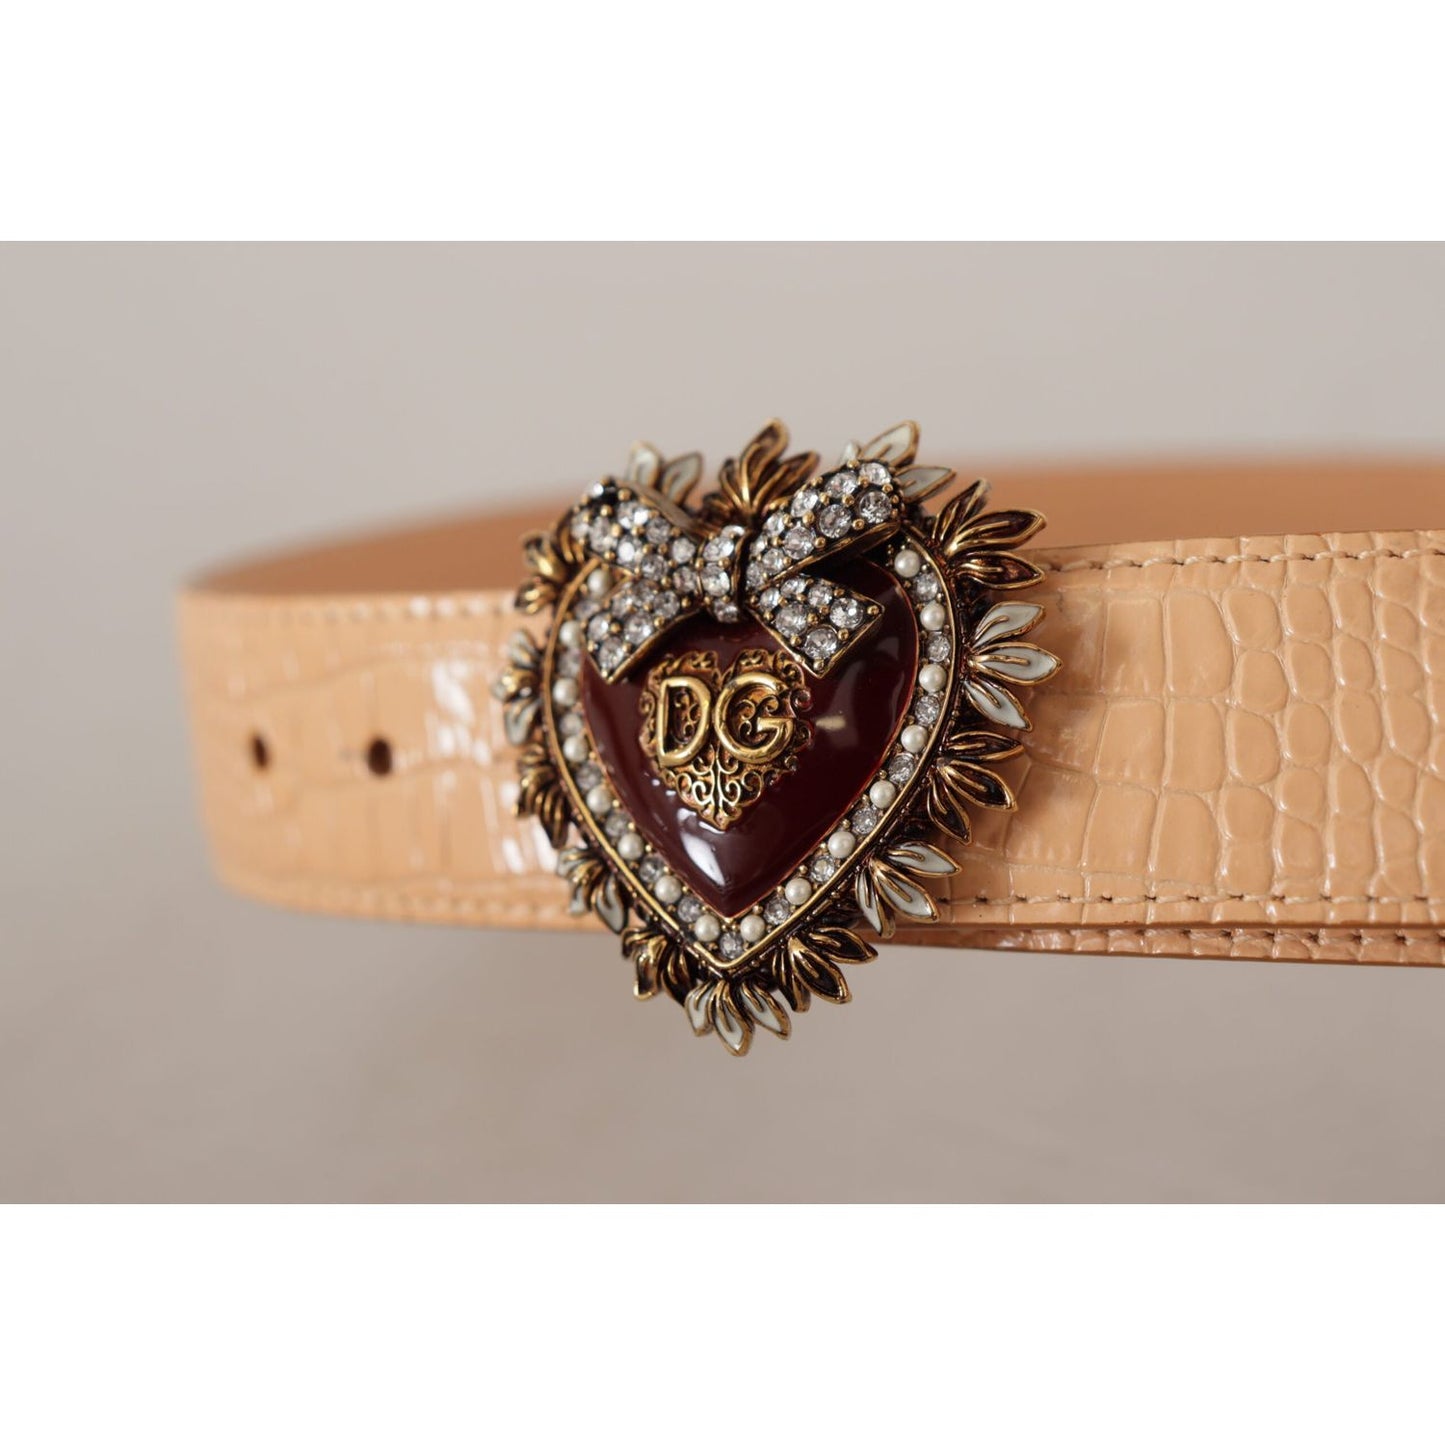 Dolce & Gabbana Enchanting Nude Leather Belt with Engraved Buckle beige-croc-pattern-devotion-heart-dg-waist-buckle-belt